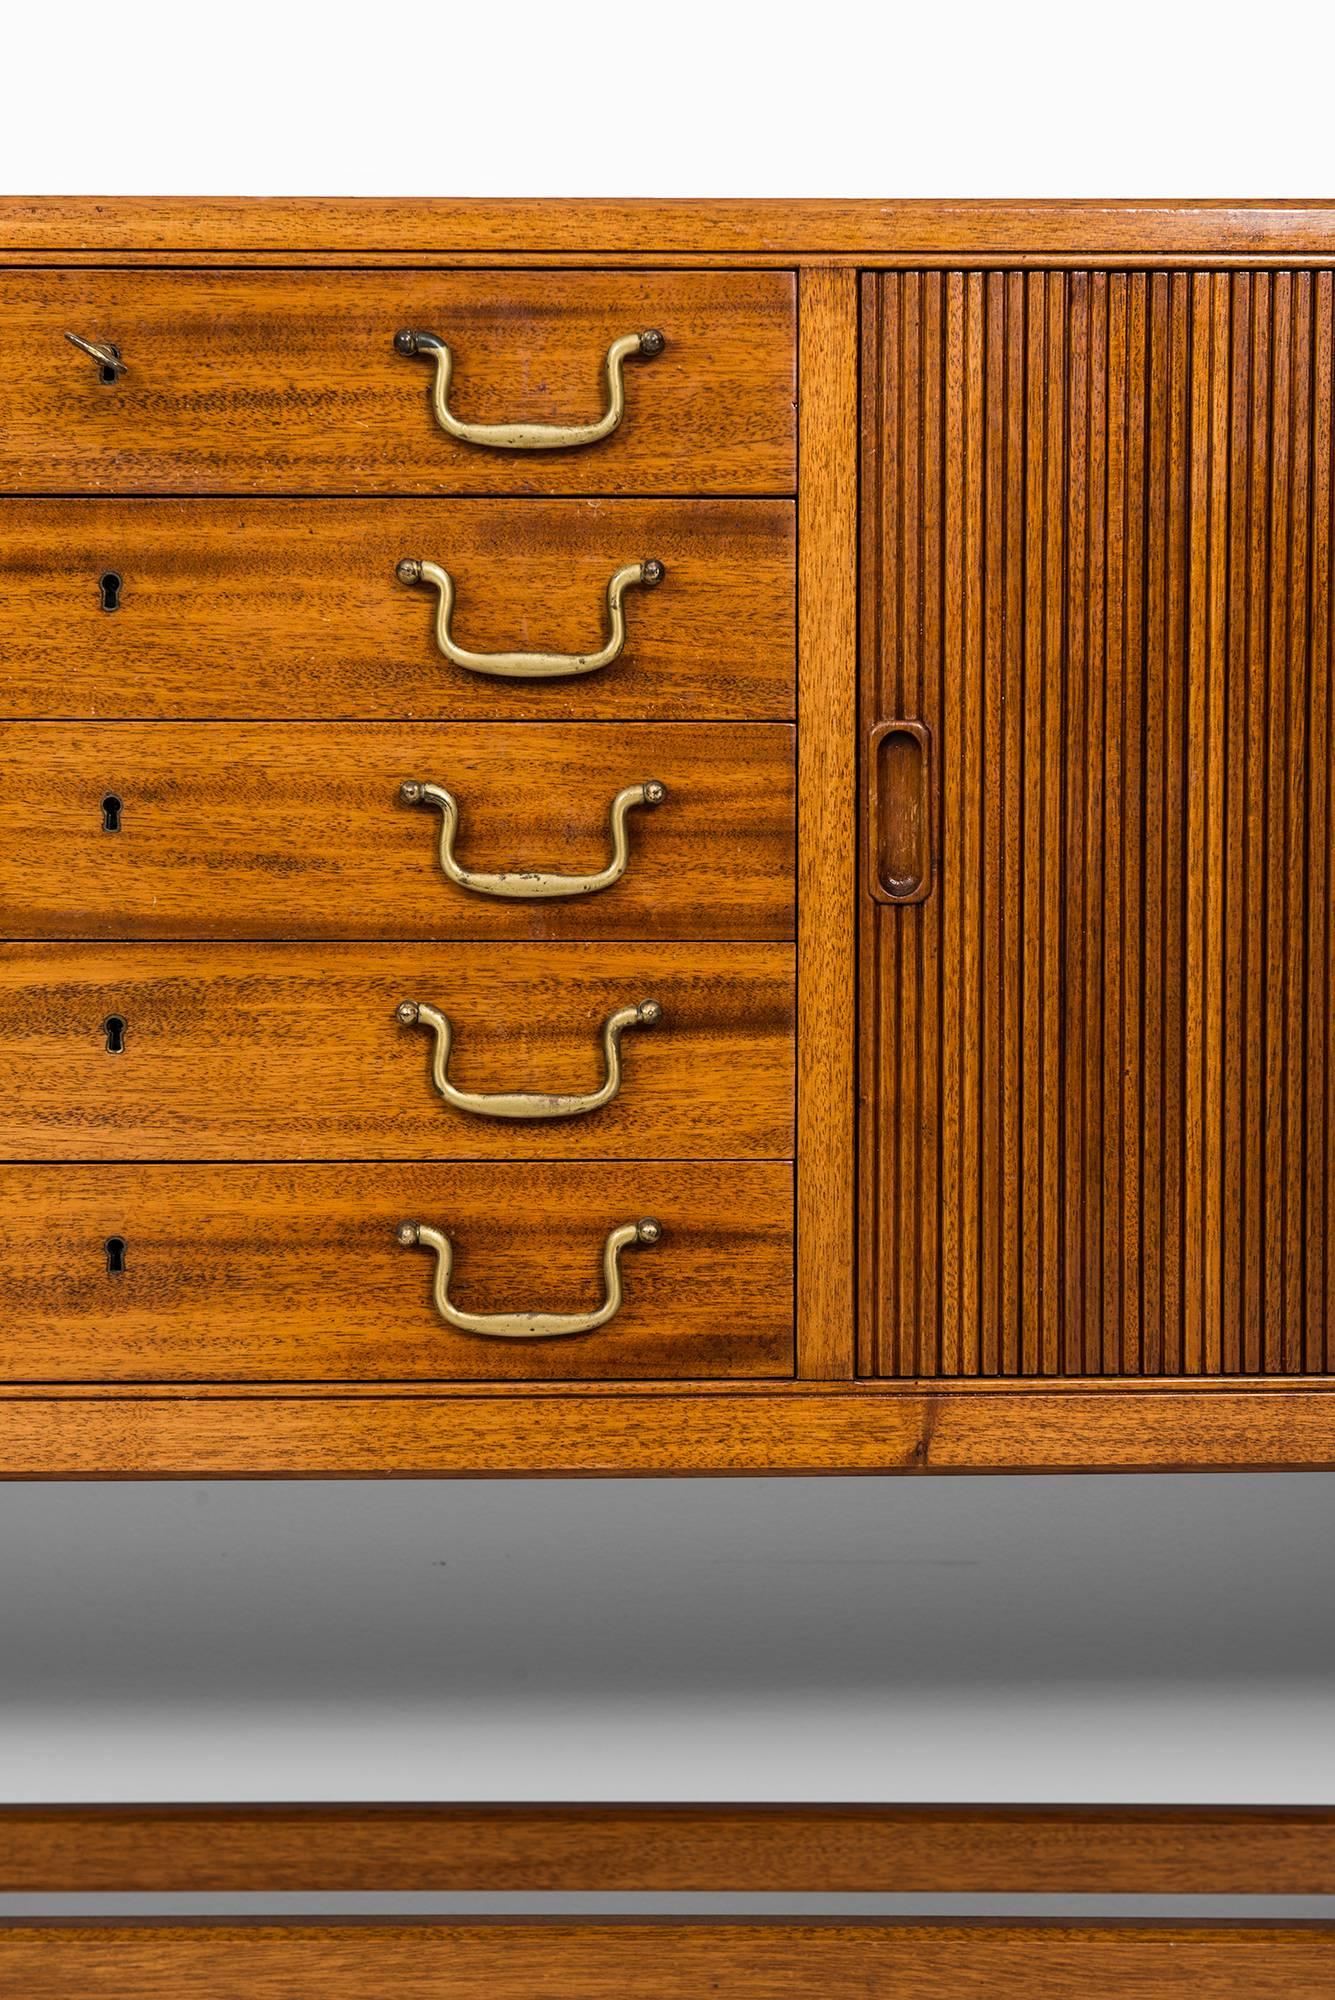 Rare cabinet or sideboard designed by David Rosén. Produced by Nordiska Kompaniet in Sweden.